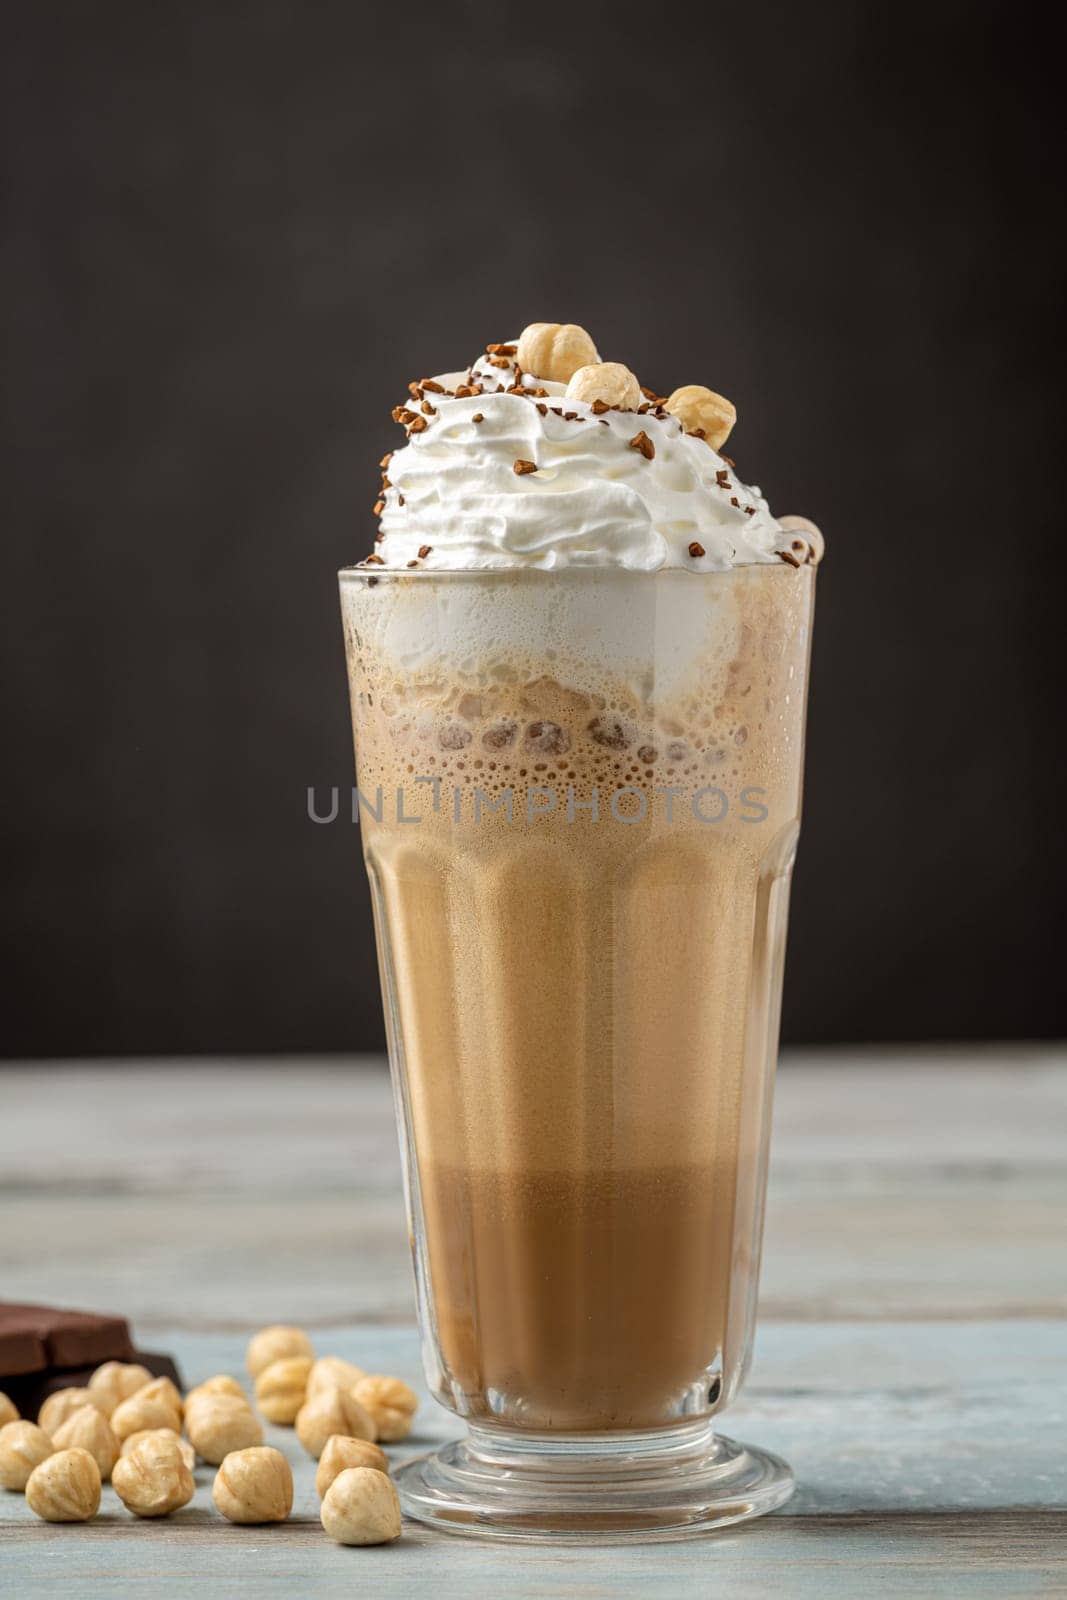 hazelnut and chocolate milkshake with coffee sprinkled on top